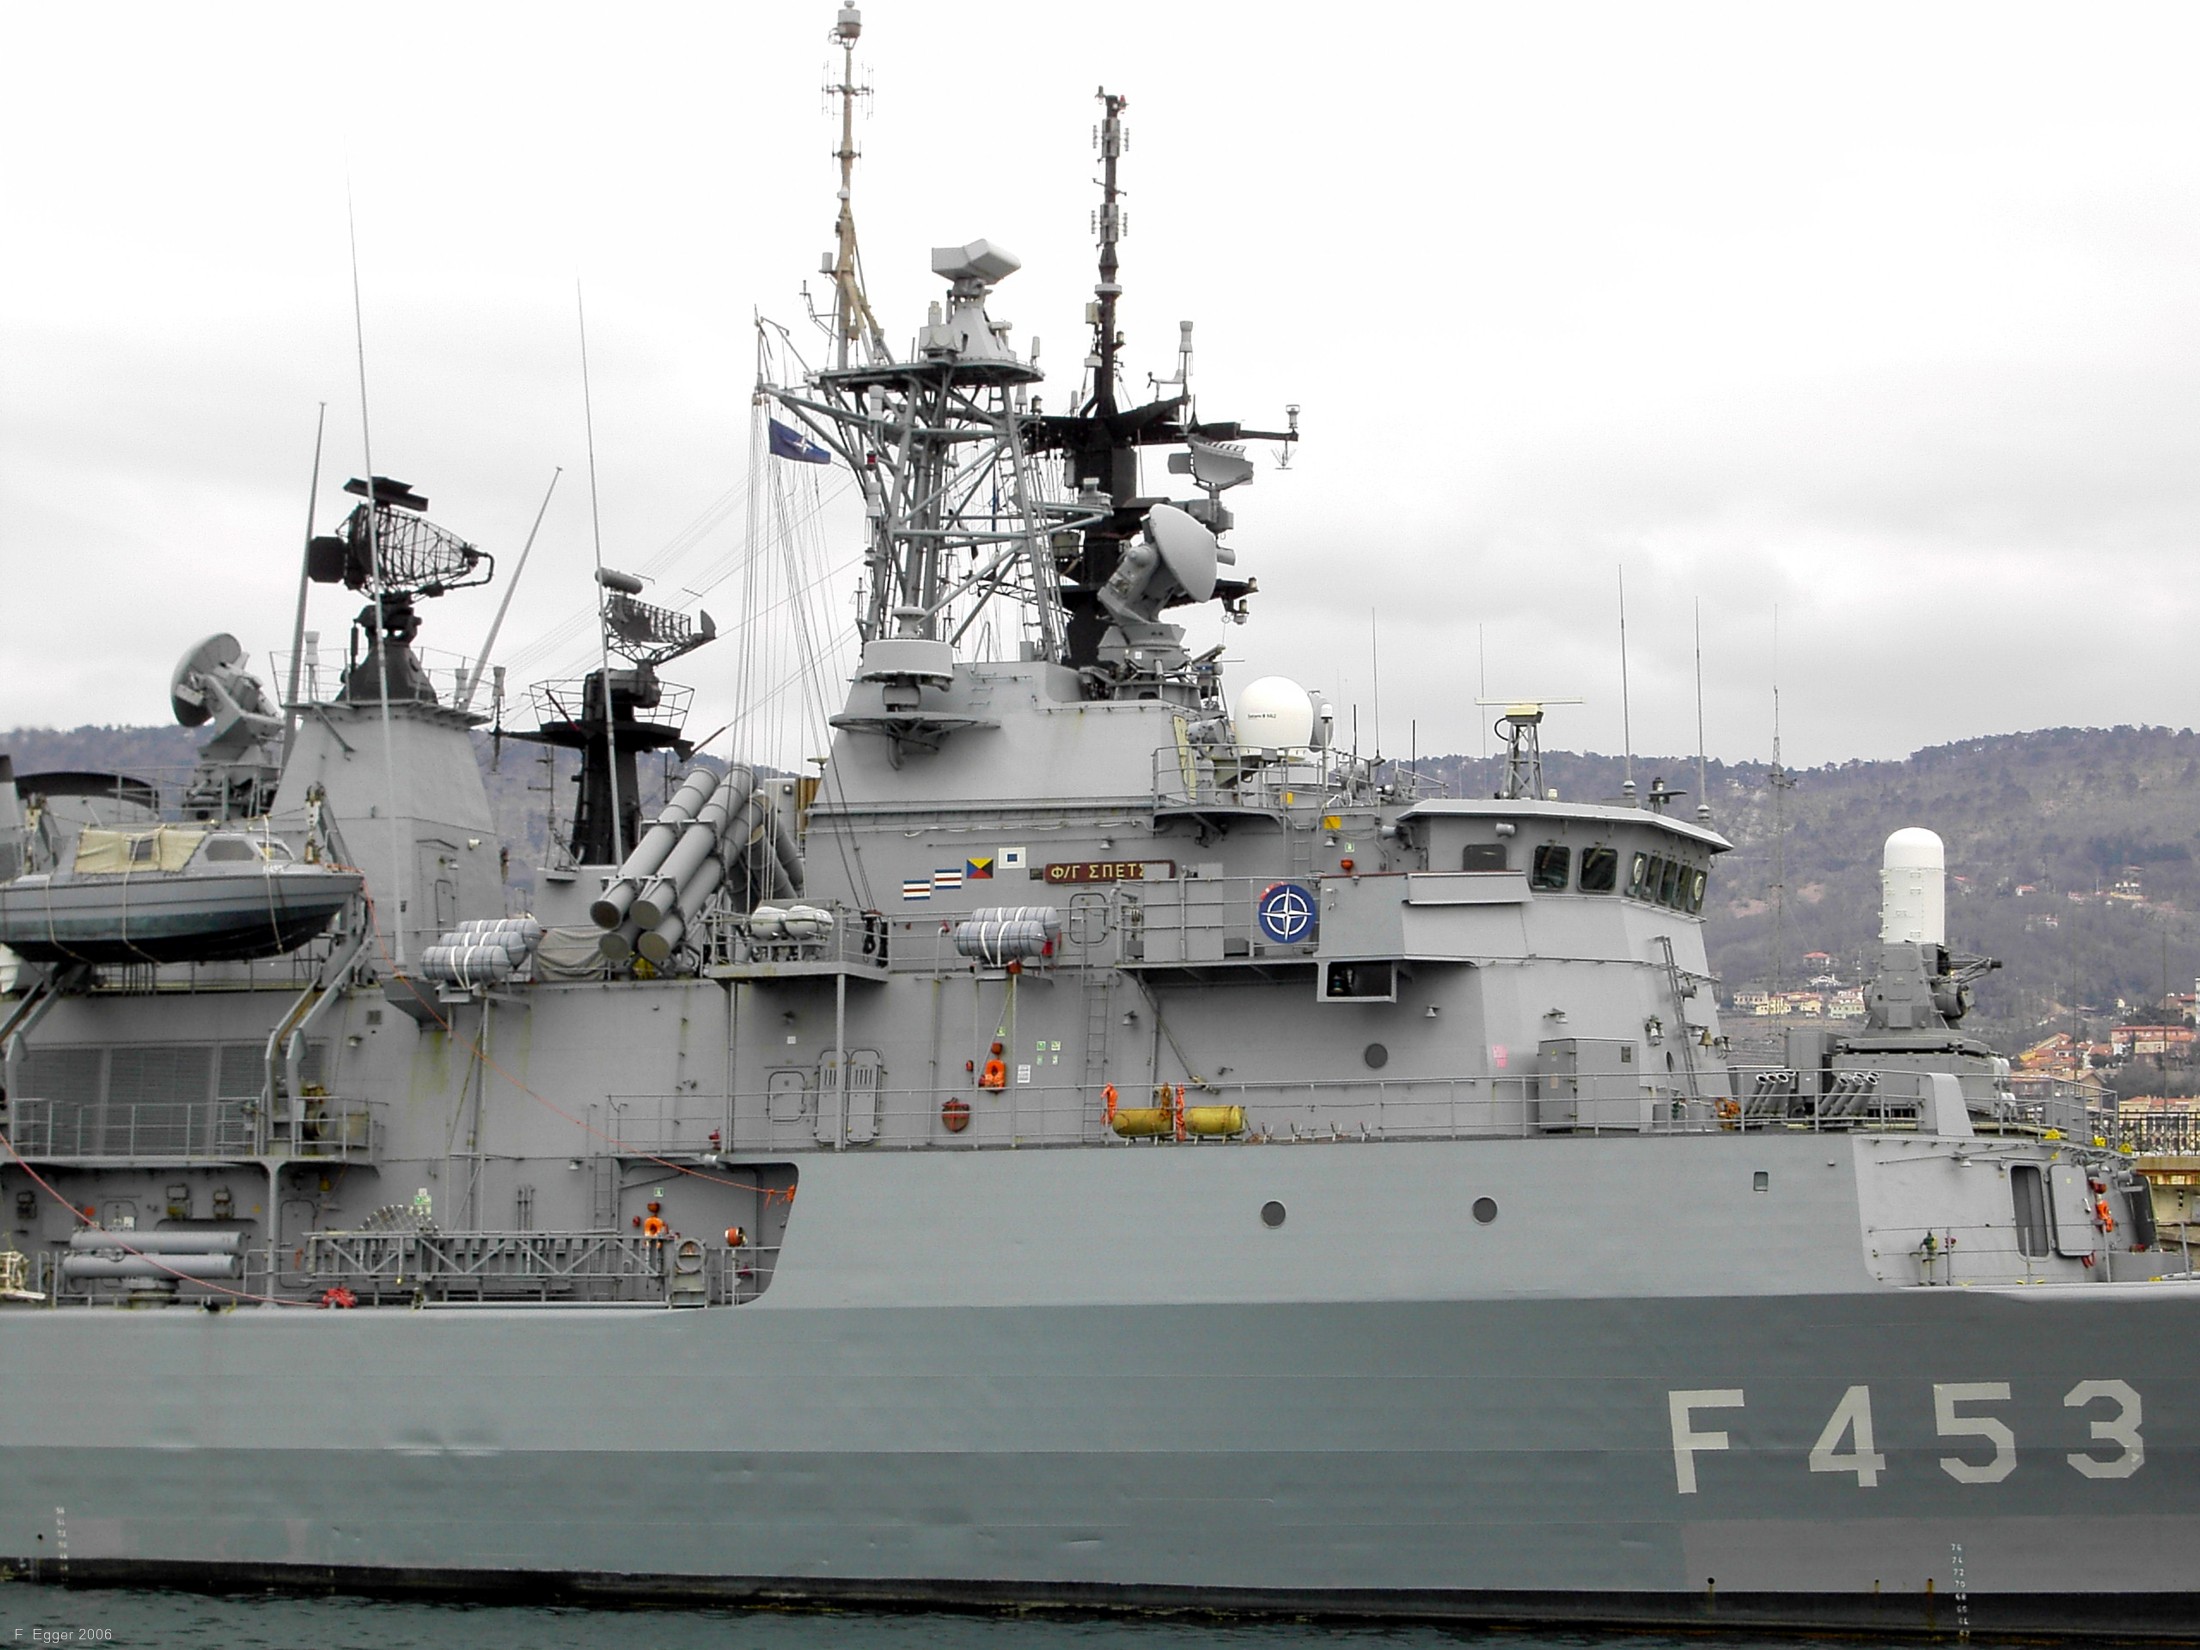 f 453 hs spetsai hydra class frigate meko-200hn hellenic navy greece standing nato response force maritime group 2 snmg-2 trieste italy 2006 09